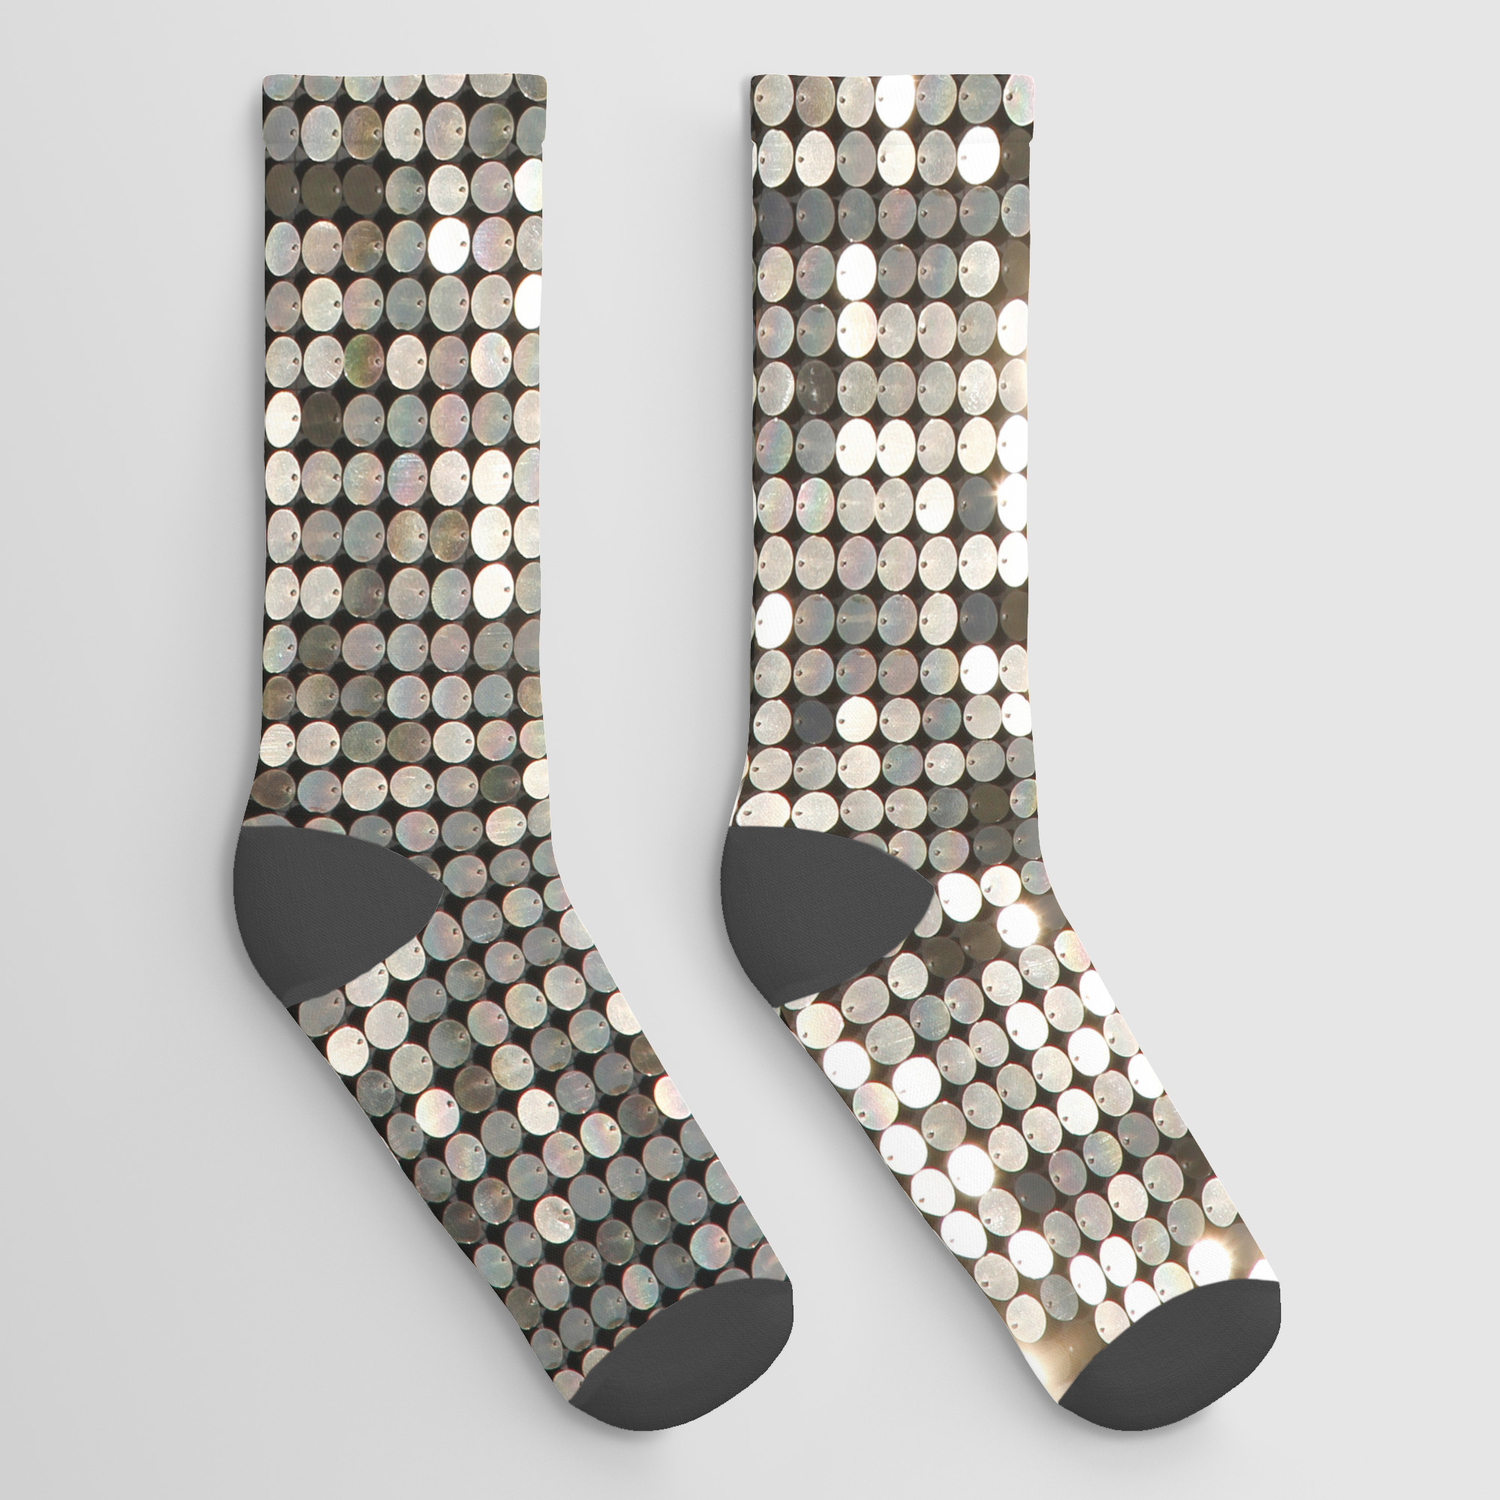 Consider ink Bargain Silver Metallic Glitter sequins Socks by newyorker01 | Society6